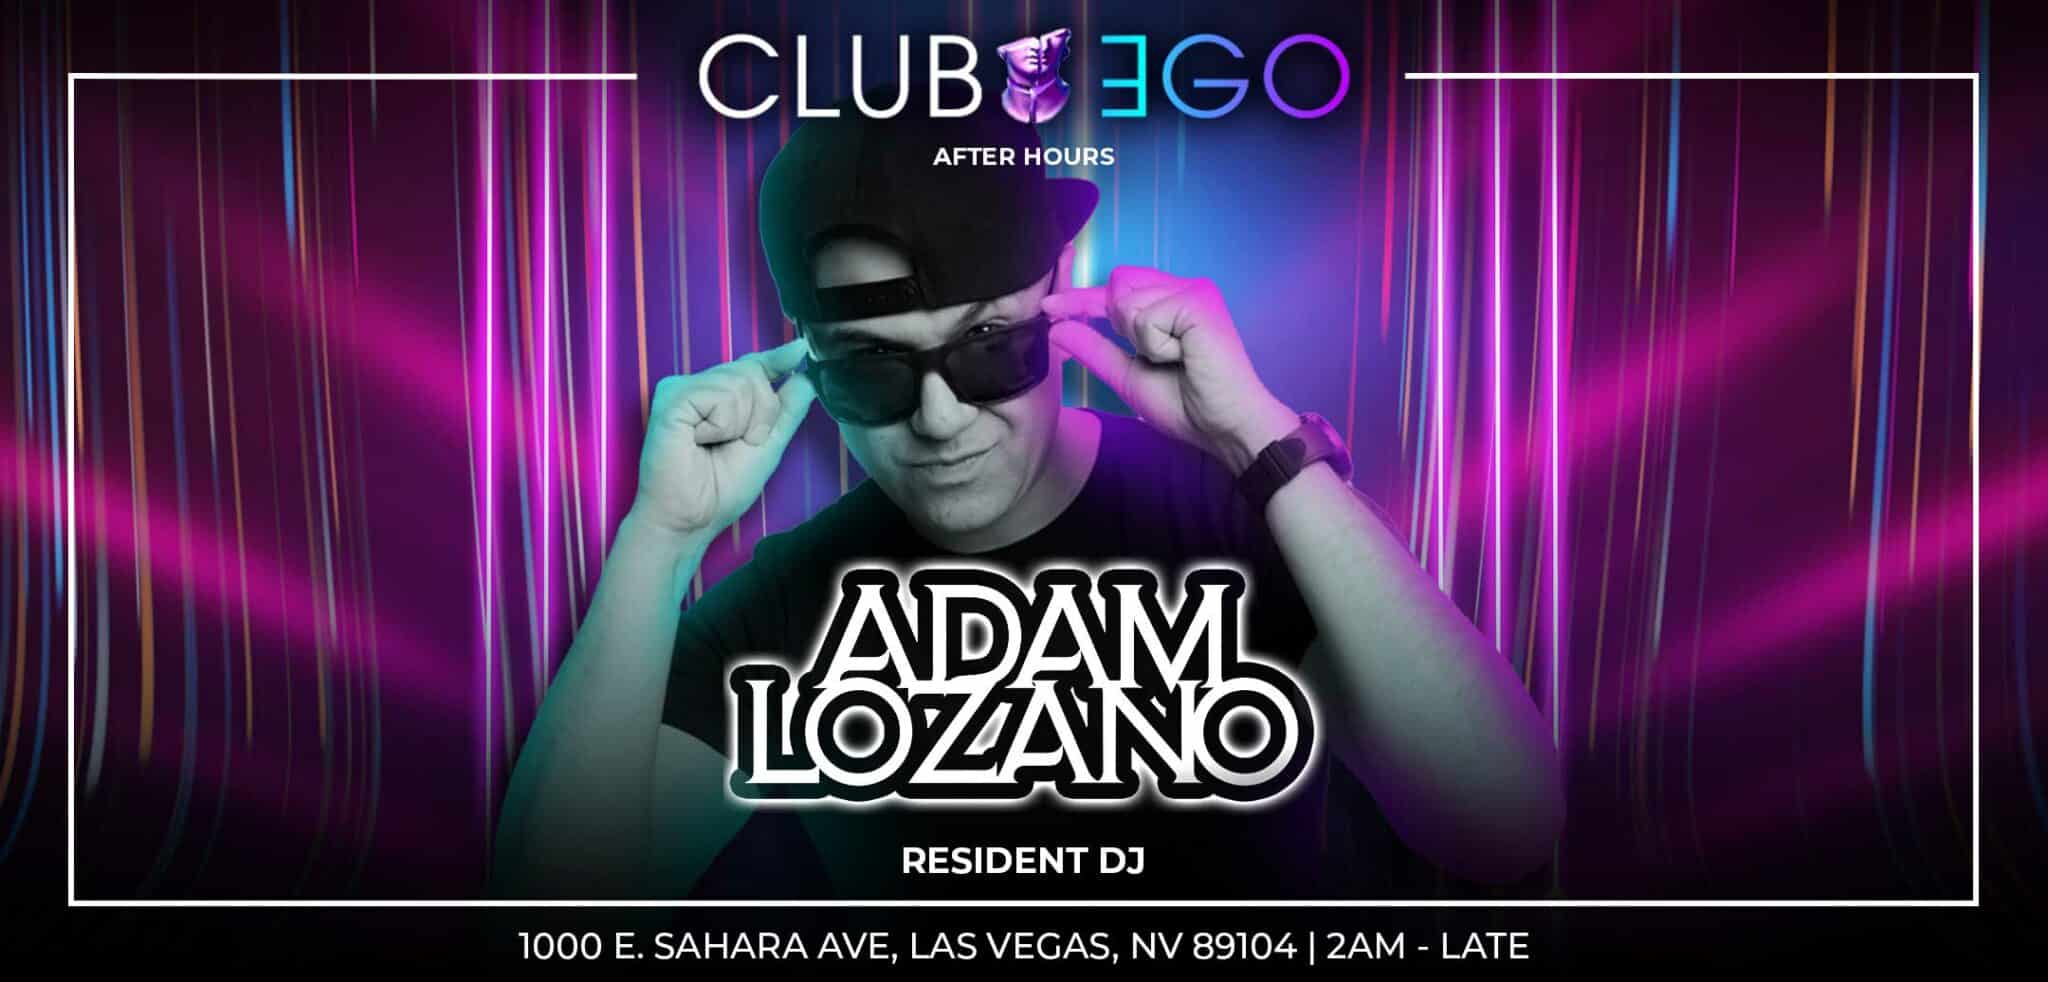 Club Ego Resident DJ, Adam Lozano